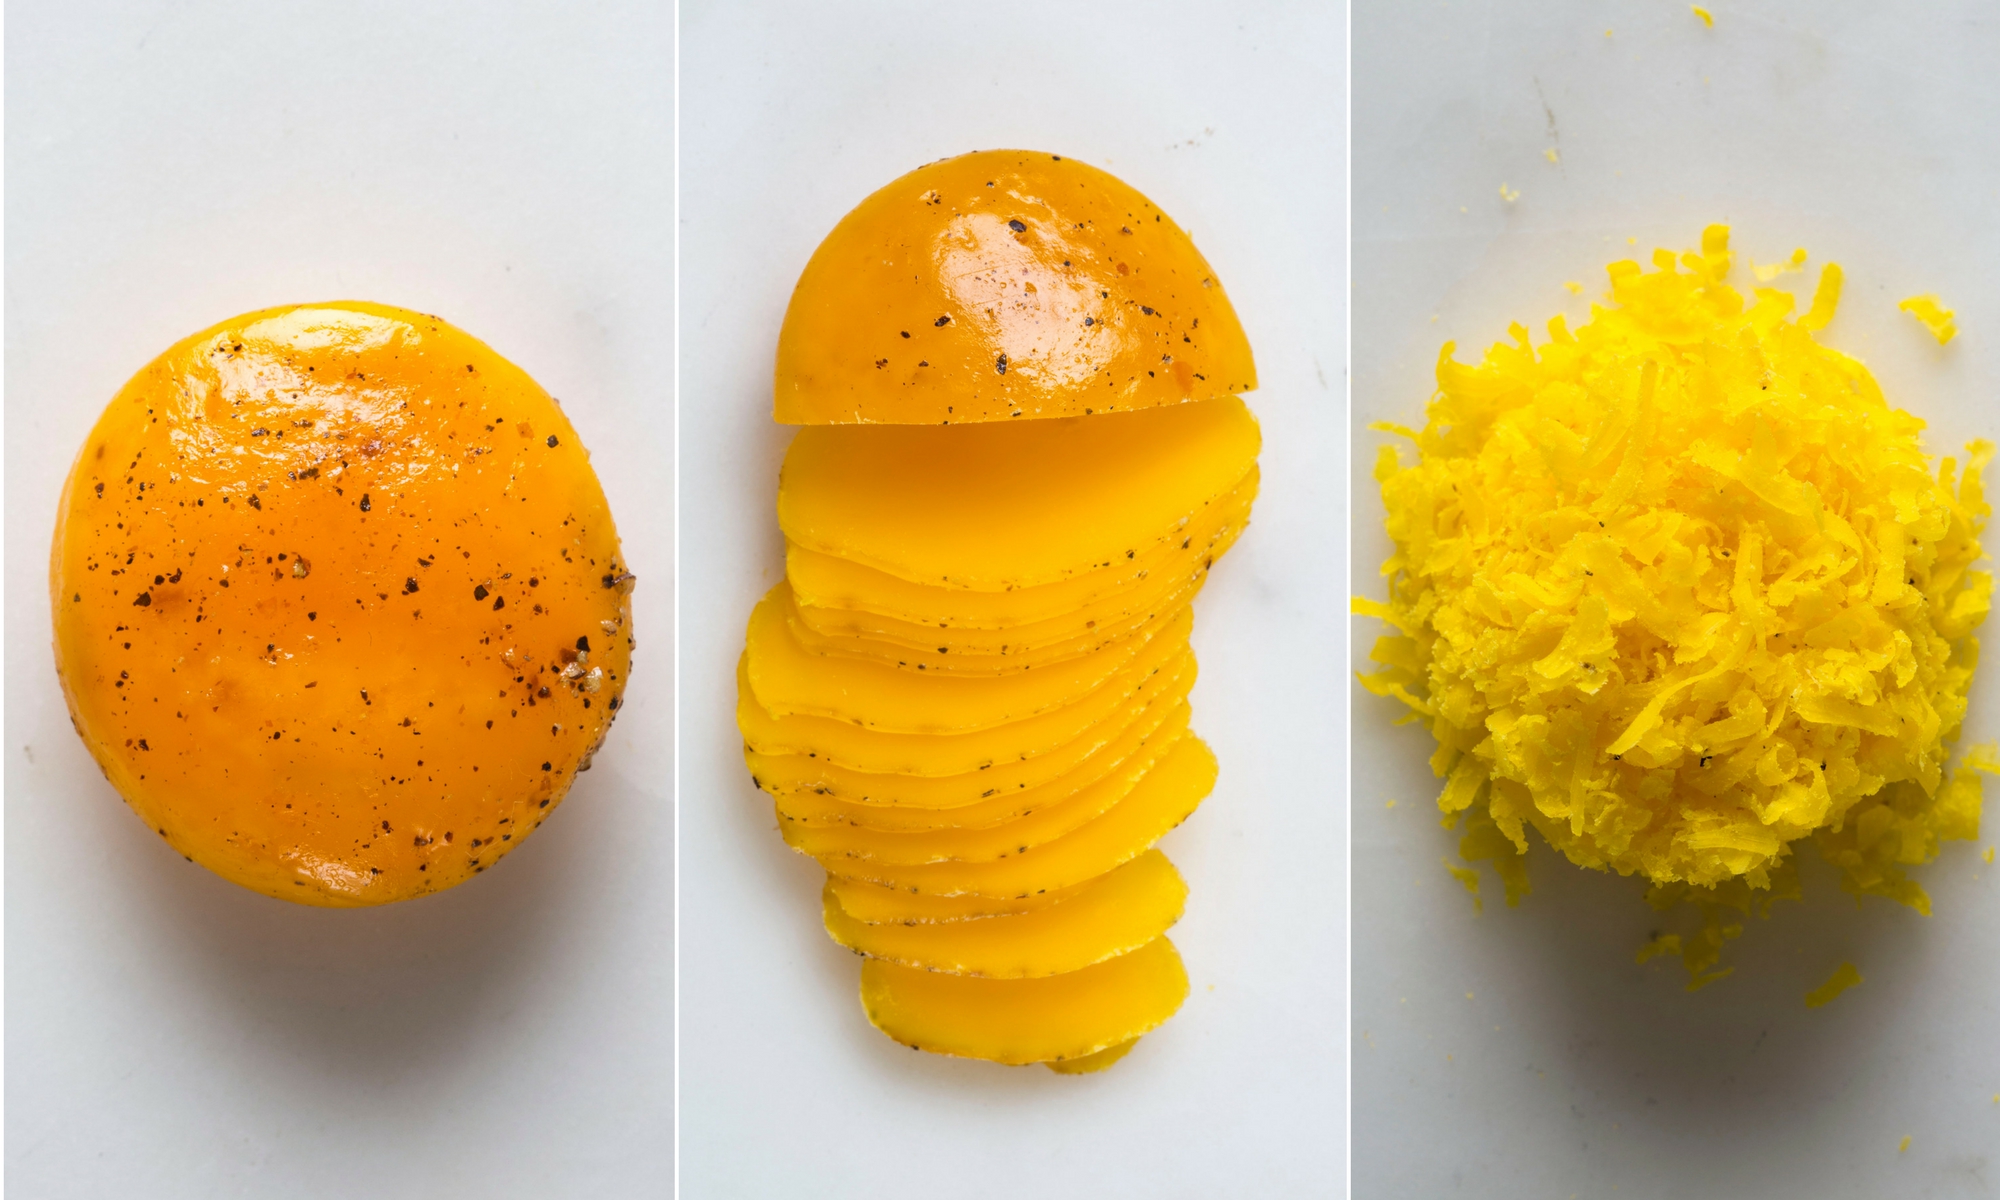 America's Test Kitchen simplifies salt-cured egg yolks | The ...